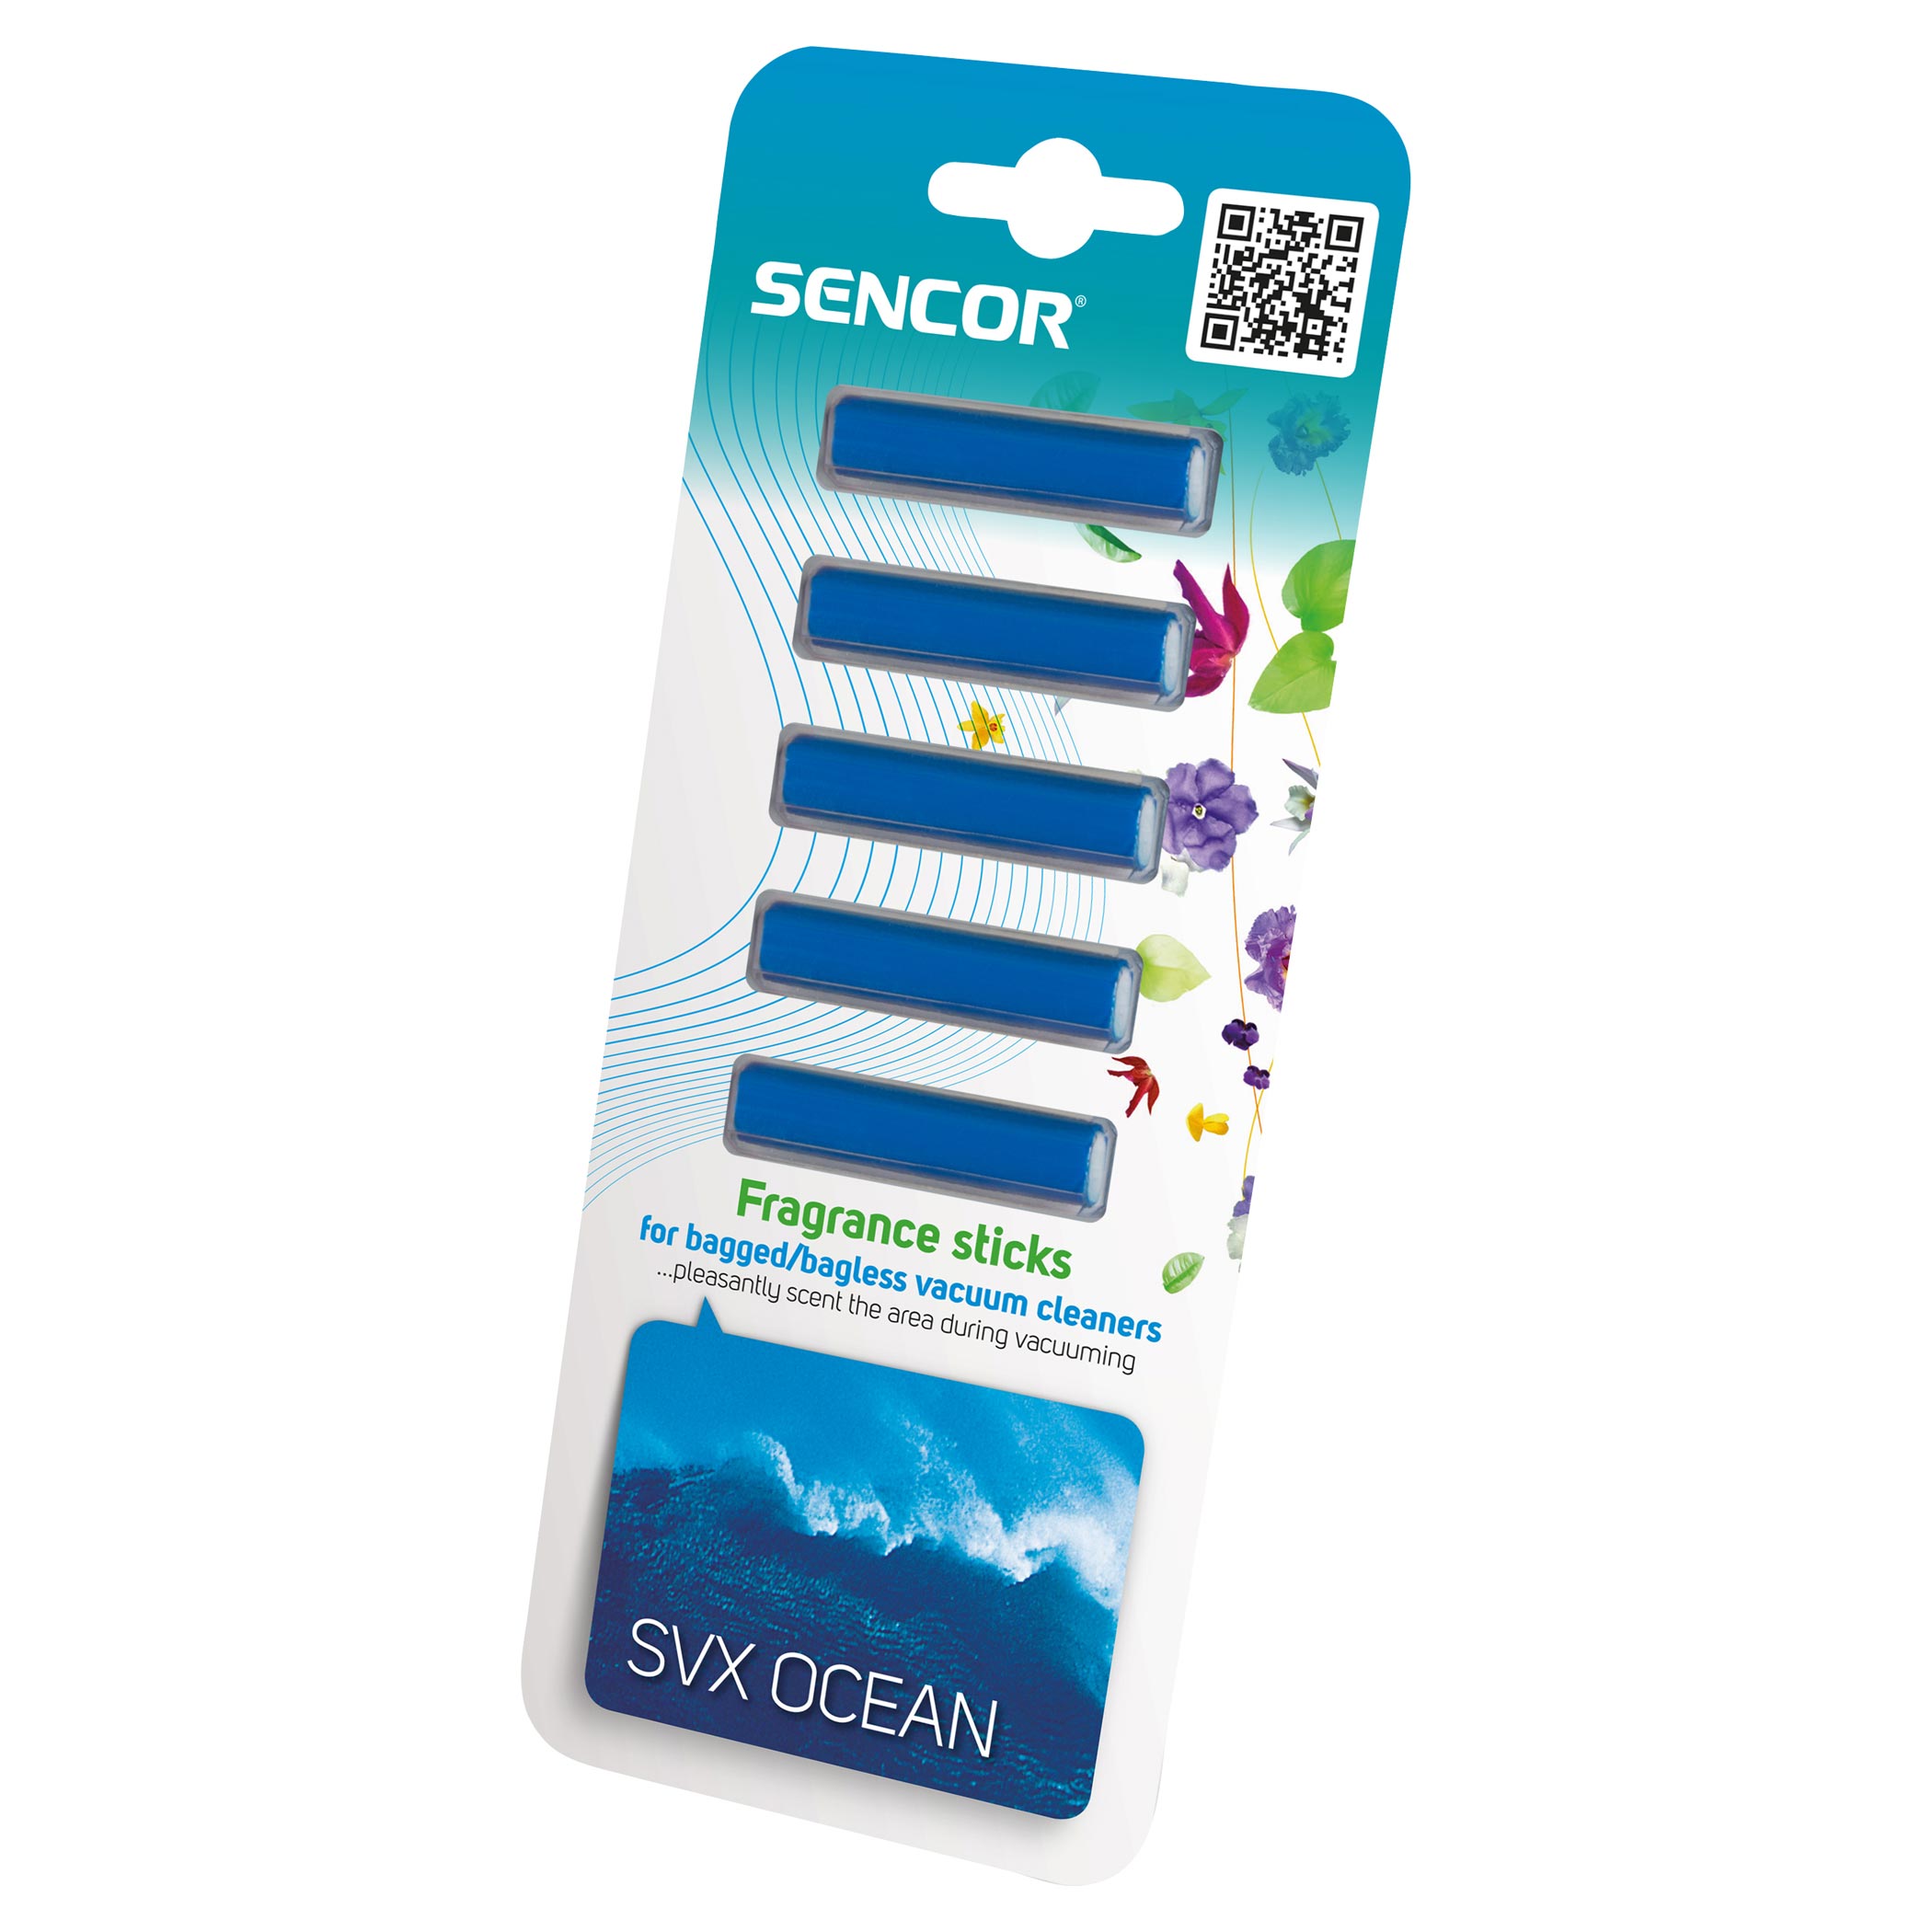 Sencor SVX OCEAN-Fragrance Sticks | Home Appliances | Other Appliances